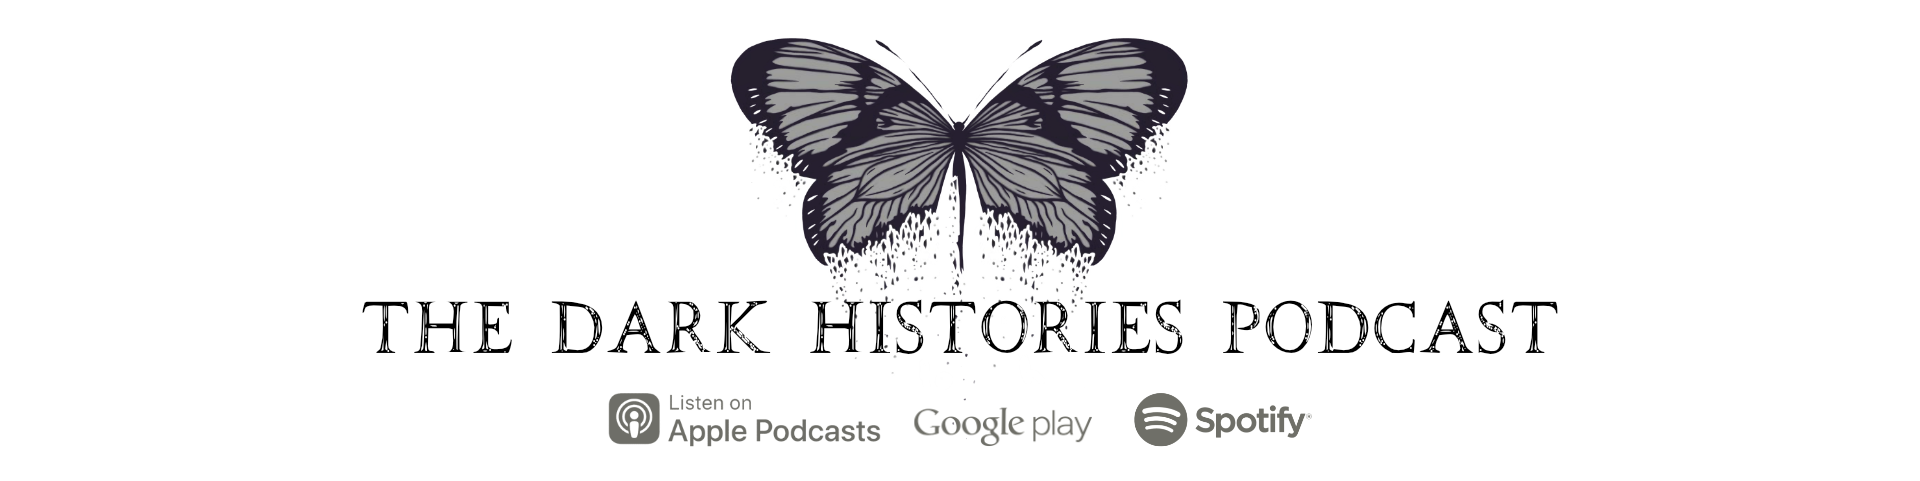 The Dark Histories Podcast